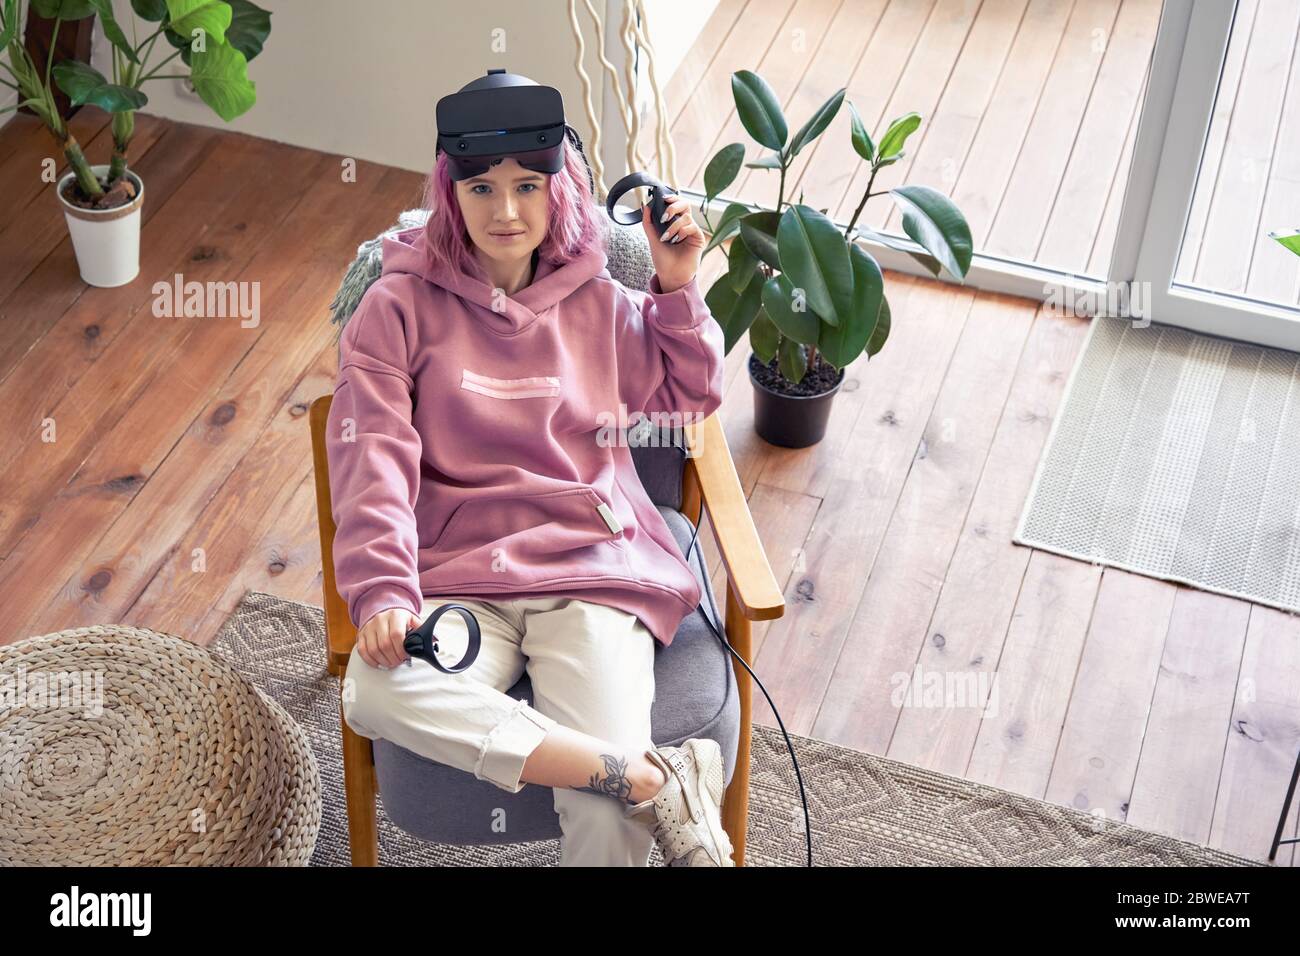 Moda adolescente niña llevar vr auricular mirar cámara sentarse en silla superior ver retrato. Foto de stock